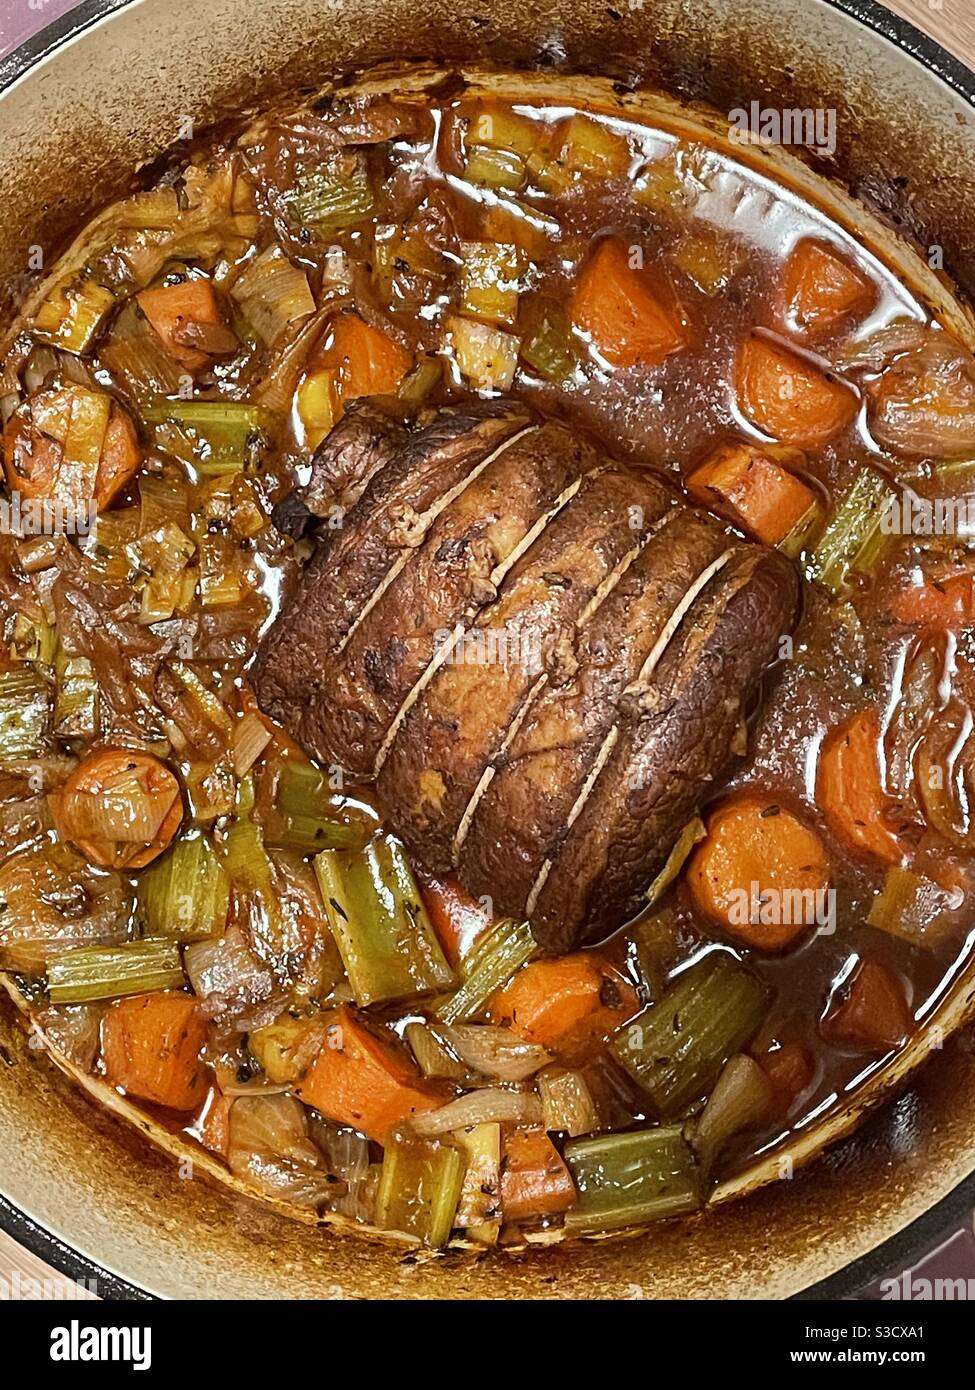 Pot roast brisket Stock Photo